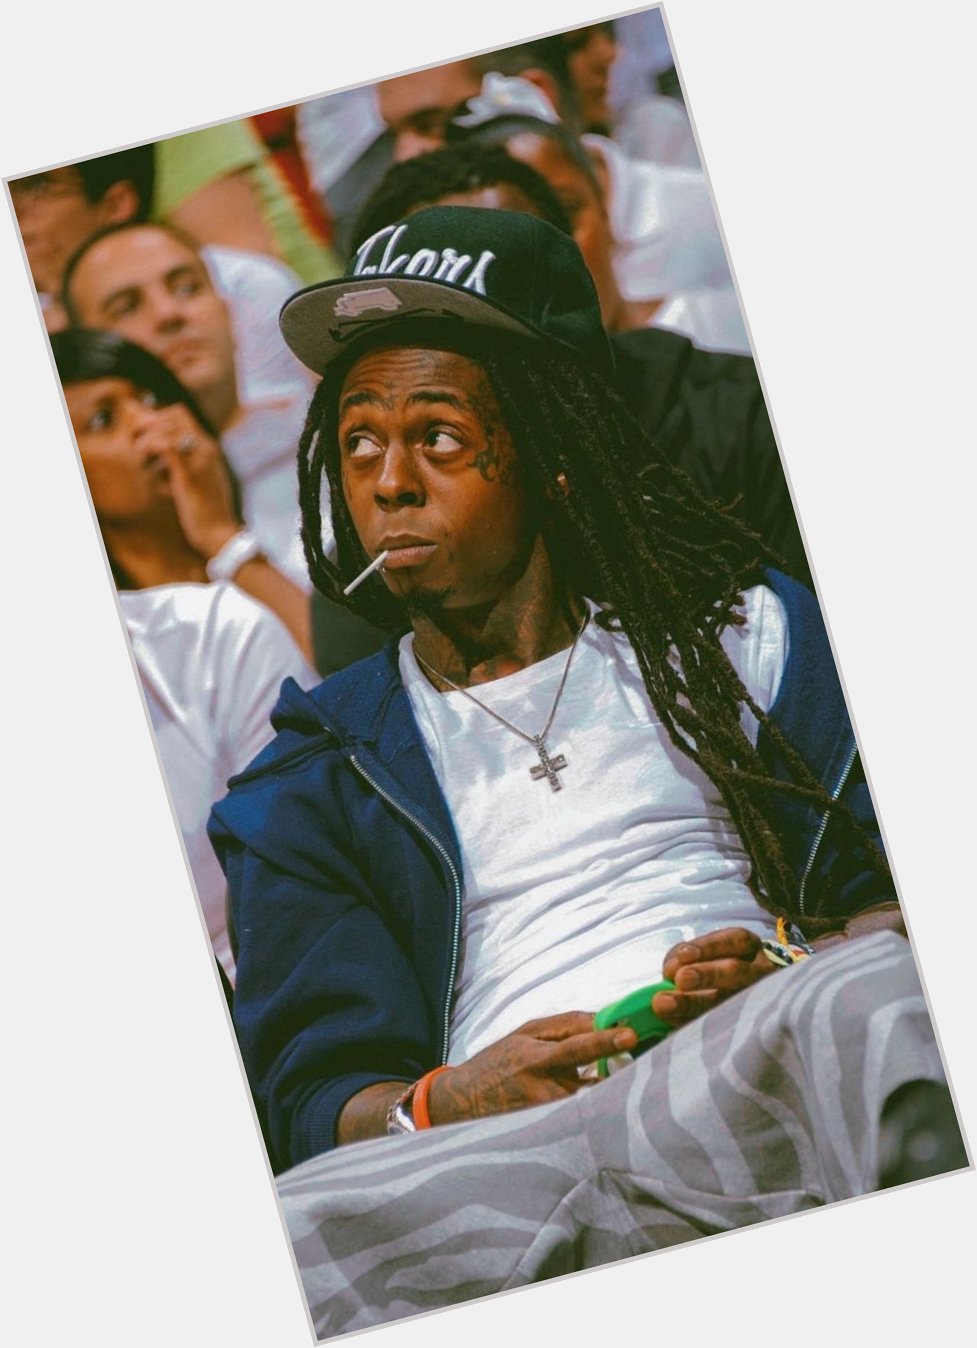 Happy birthday to the greatest rapper alive. 
Lil Wayne 